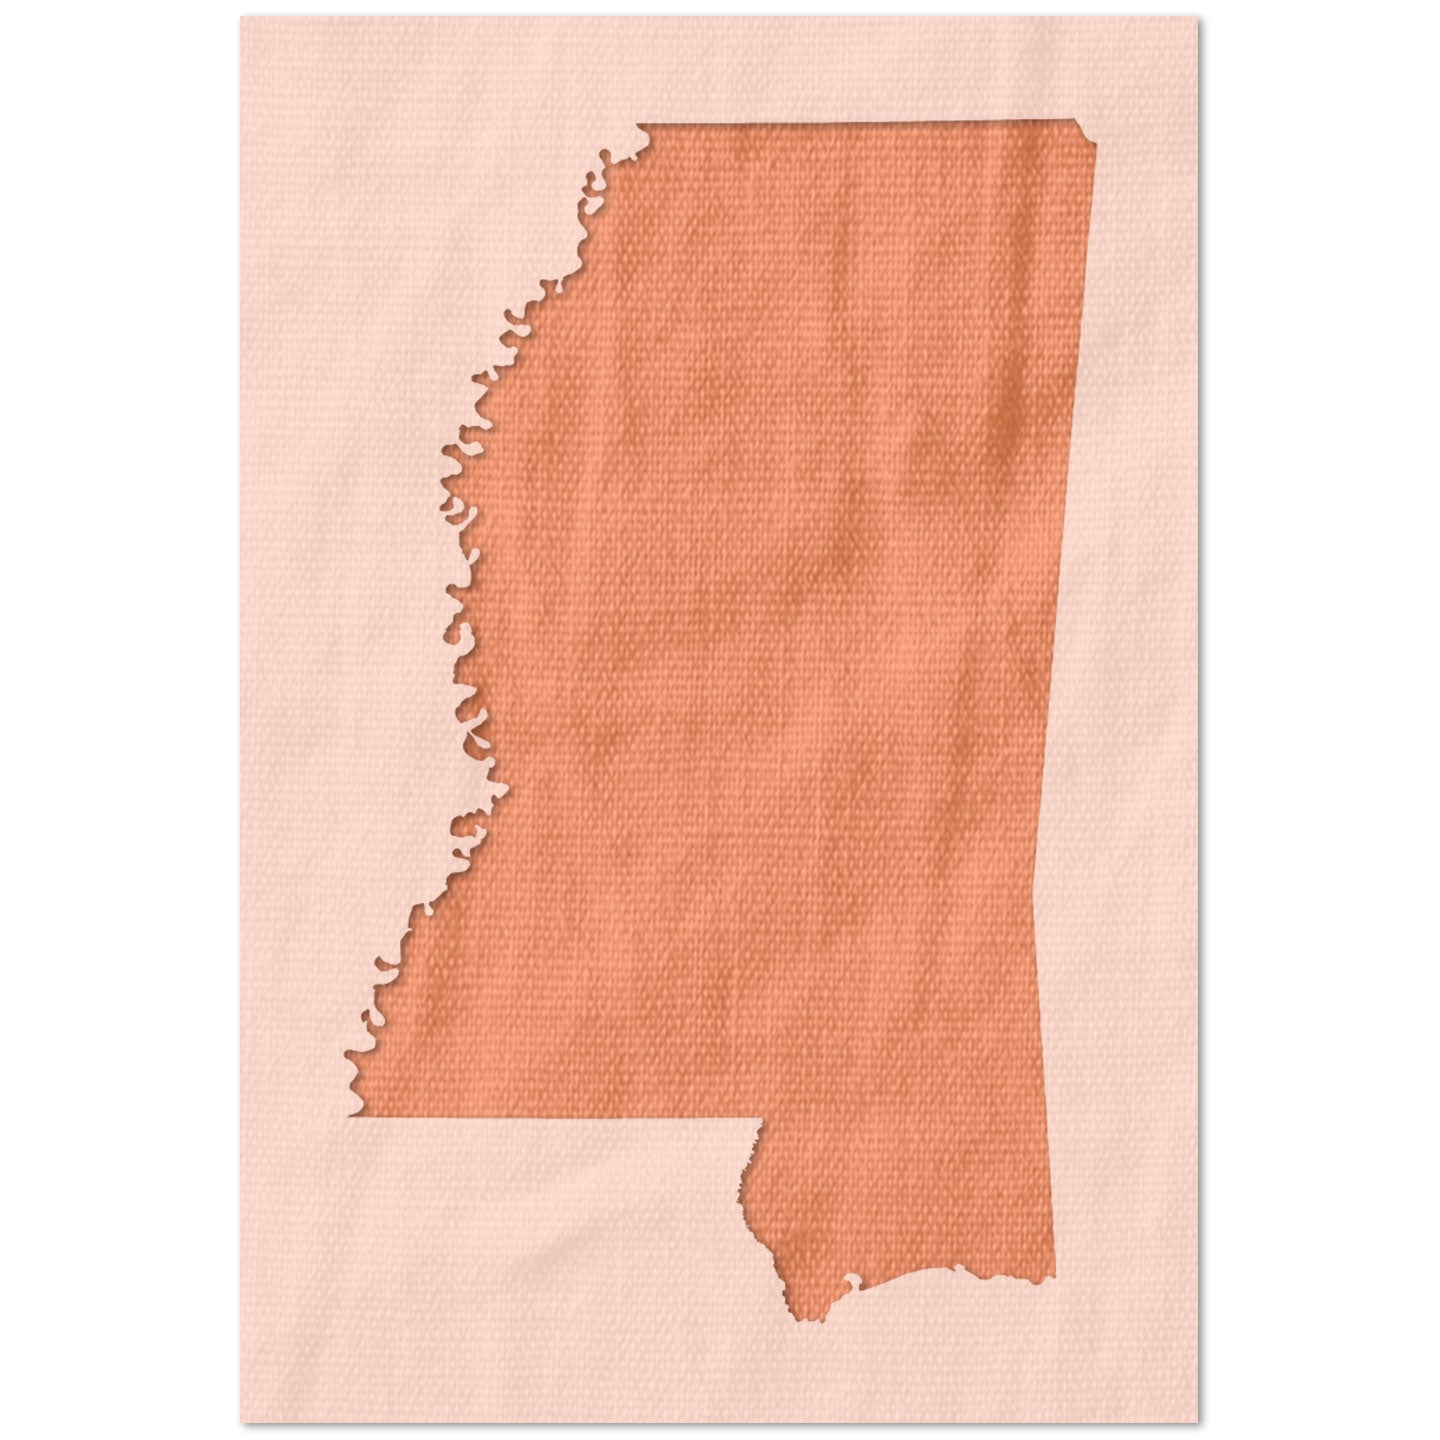 Mississippi State Outline Stencil